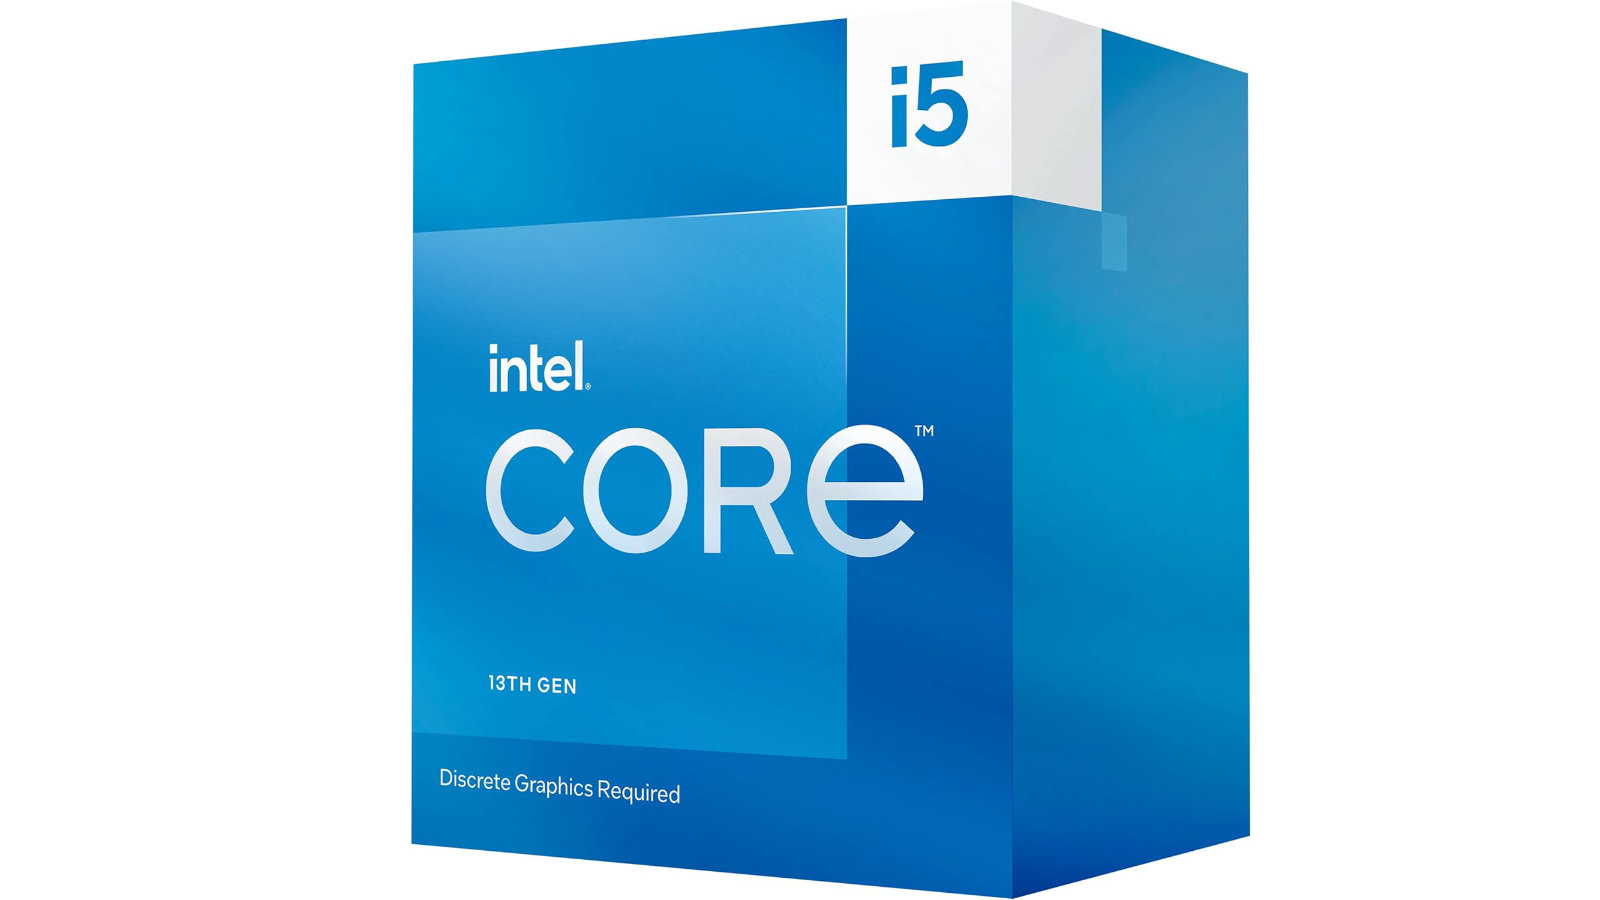 Intel Core i5-13400F retail box against a white background.